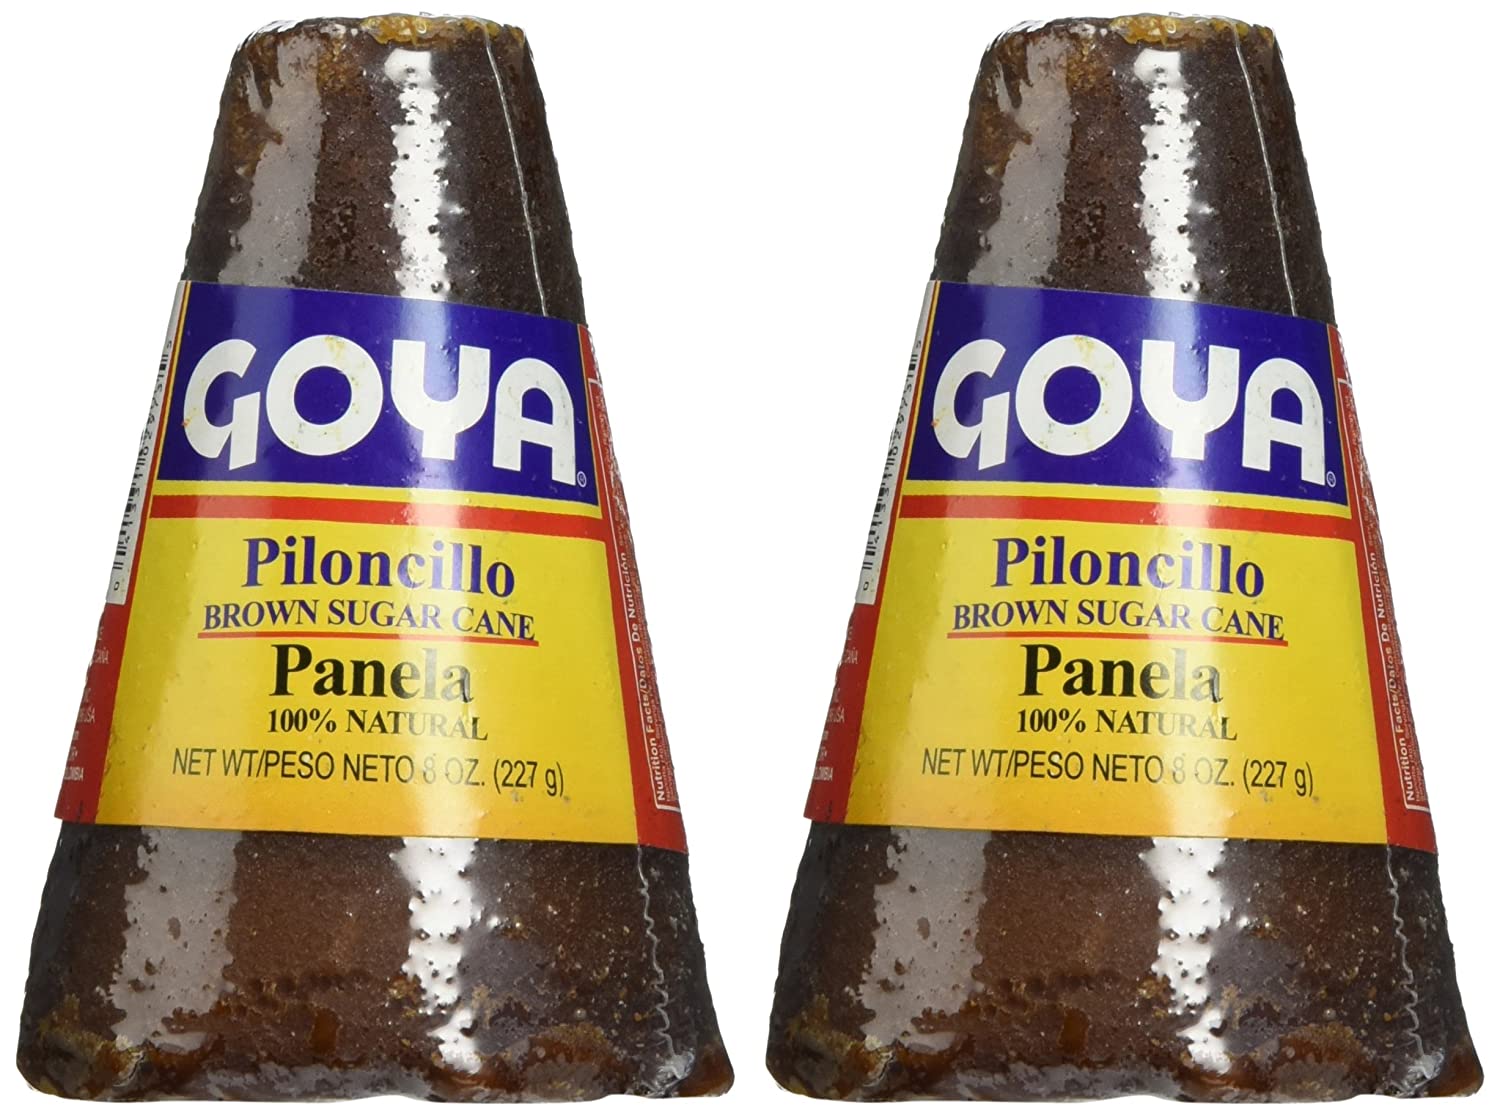 Goya Piloncillo Panela, Brown Sugar Cane 8 oz (Pack of 2) - image 2 of 2